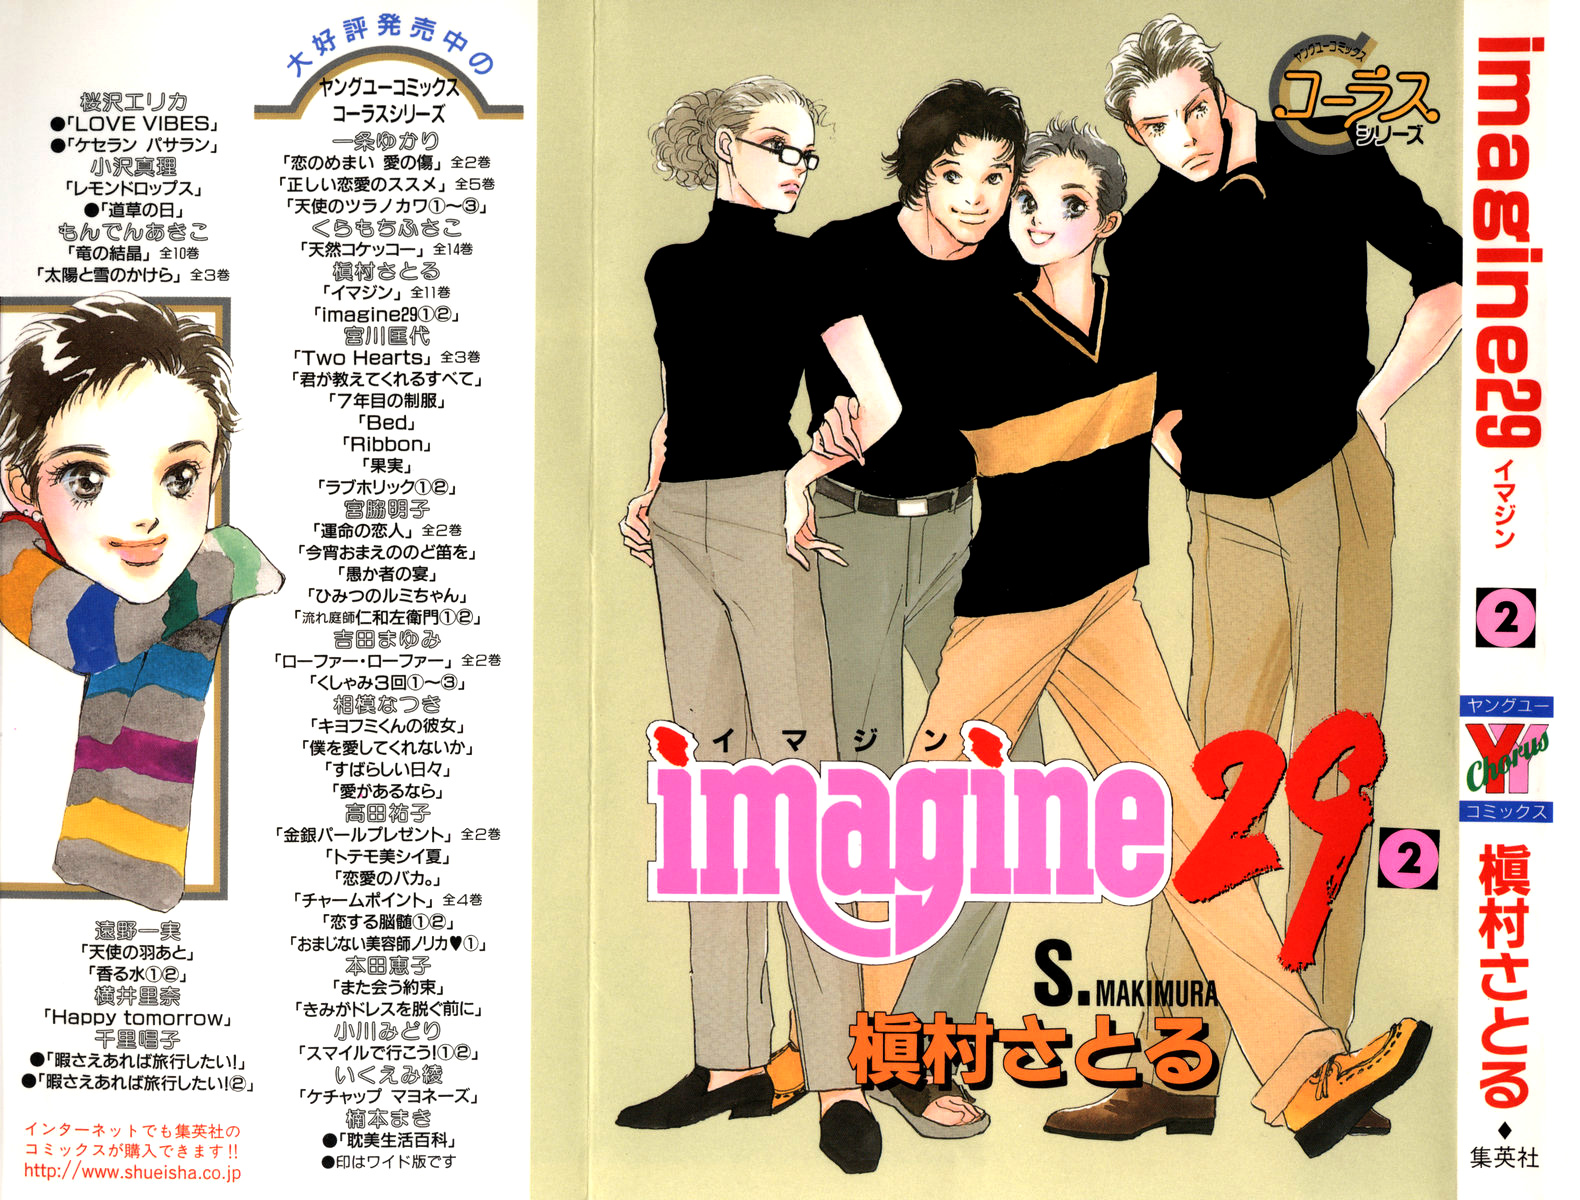 Imagine 29 - Page 1